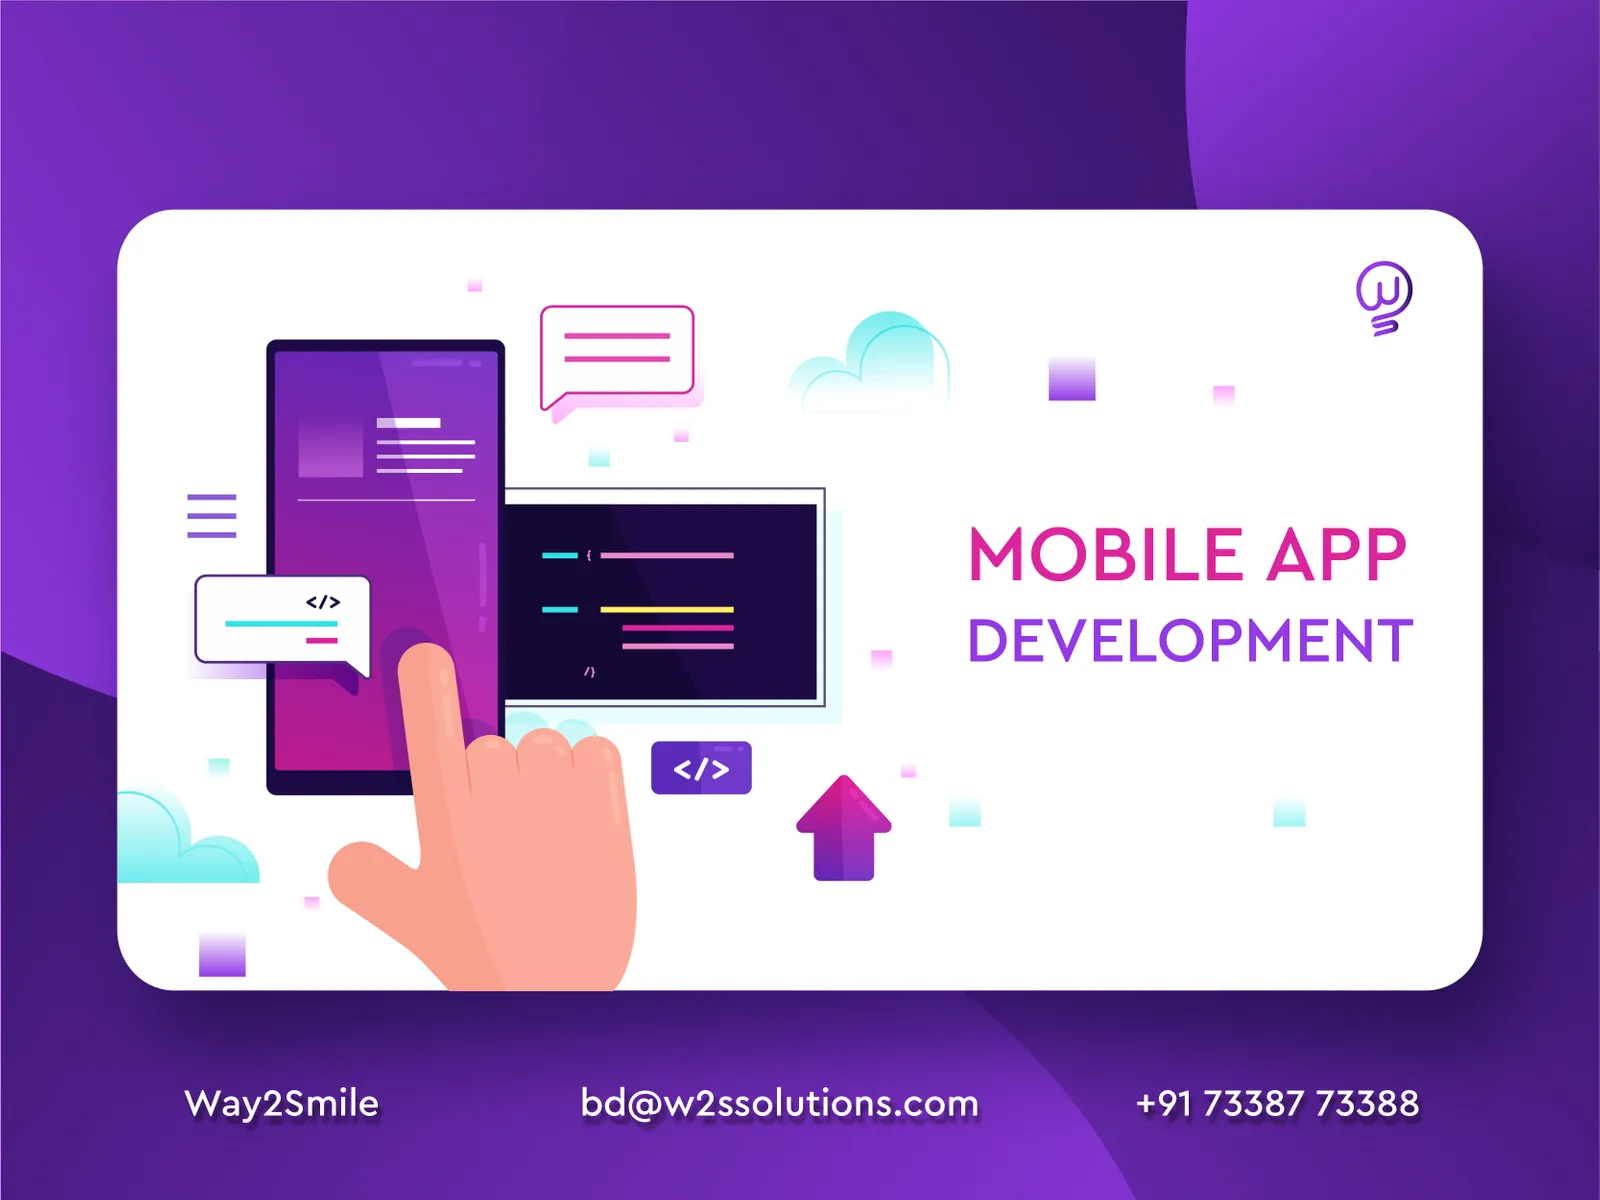 Mobile App Development Services in Chennai, India